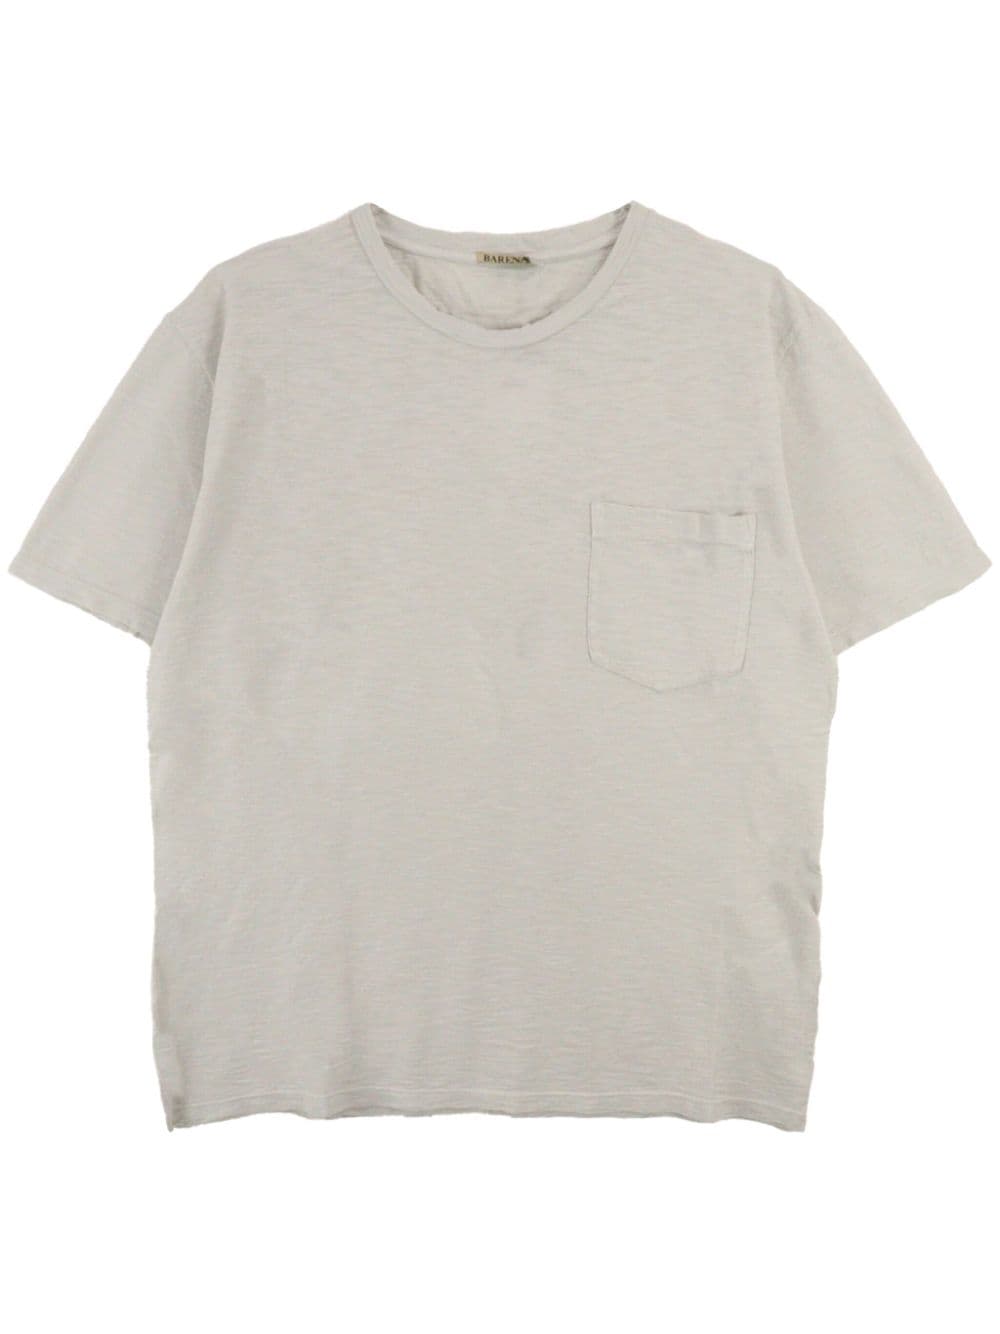 Image 1 of Barena chest-pocket cotton t-shirt